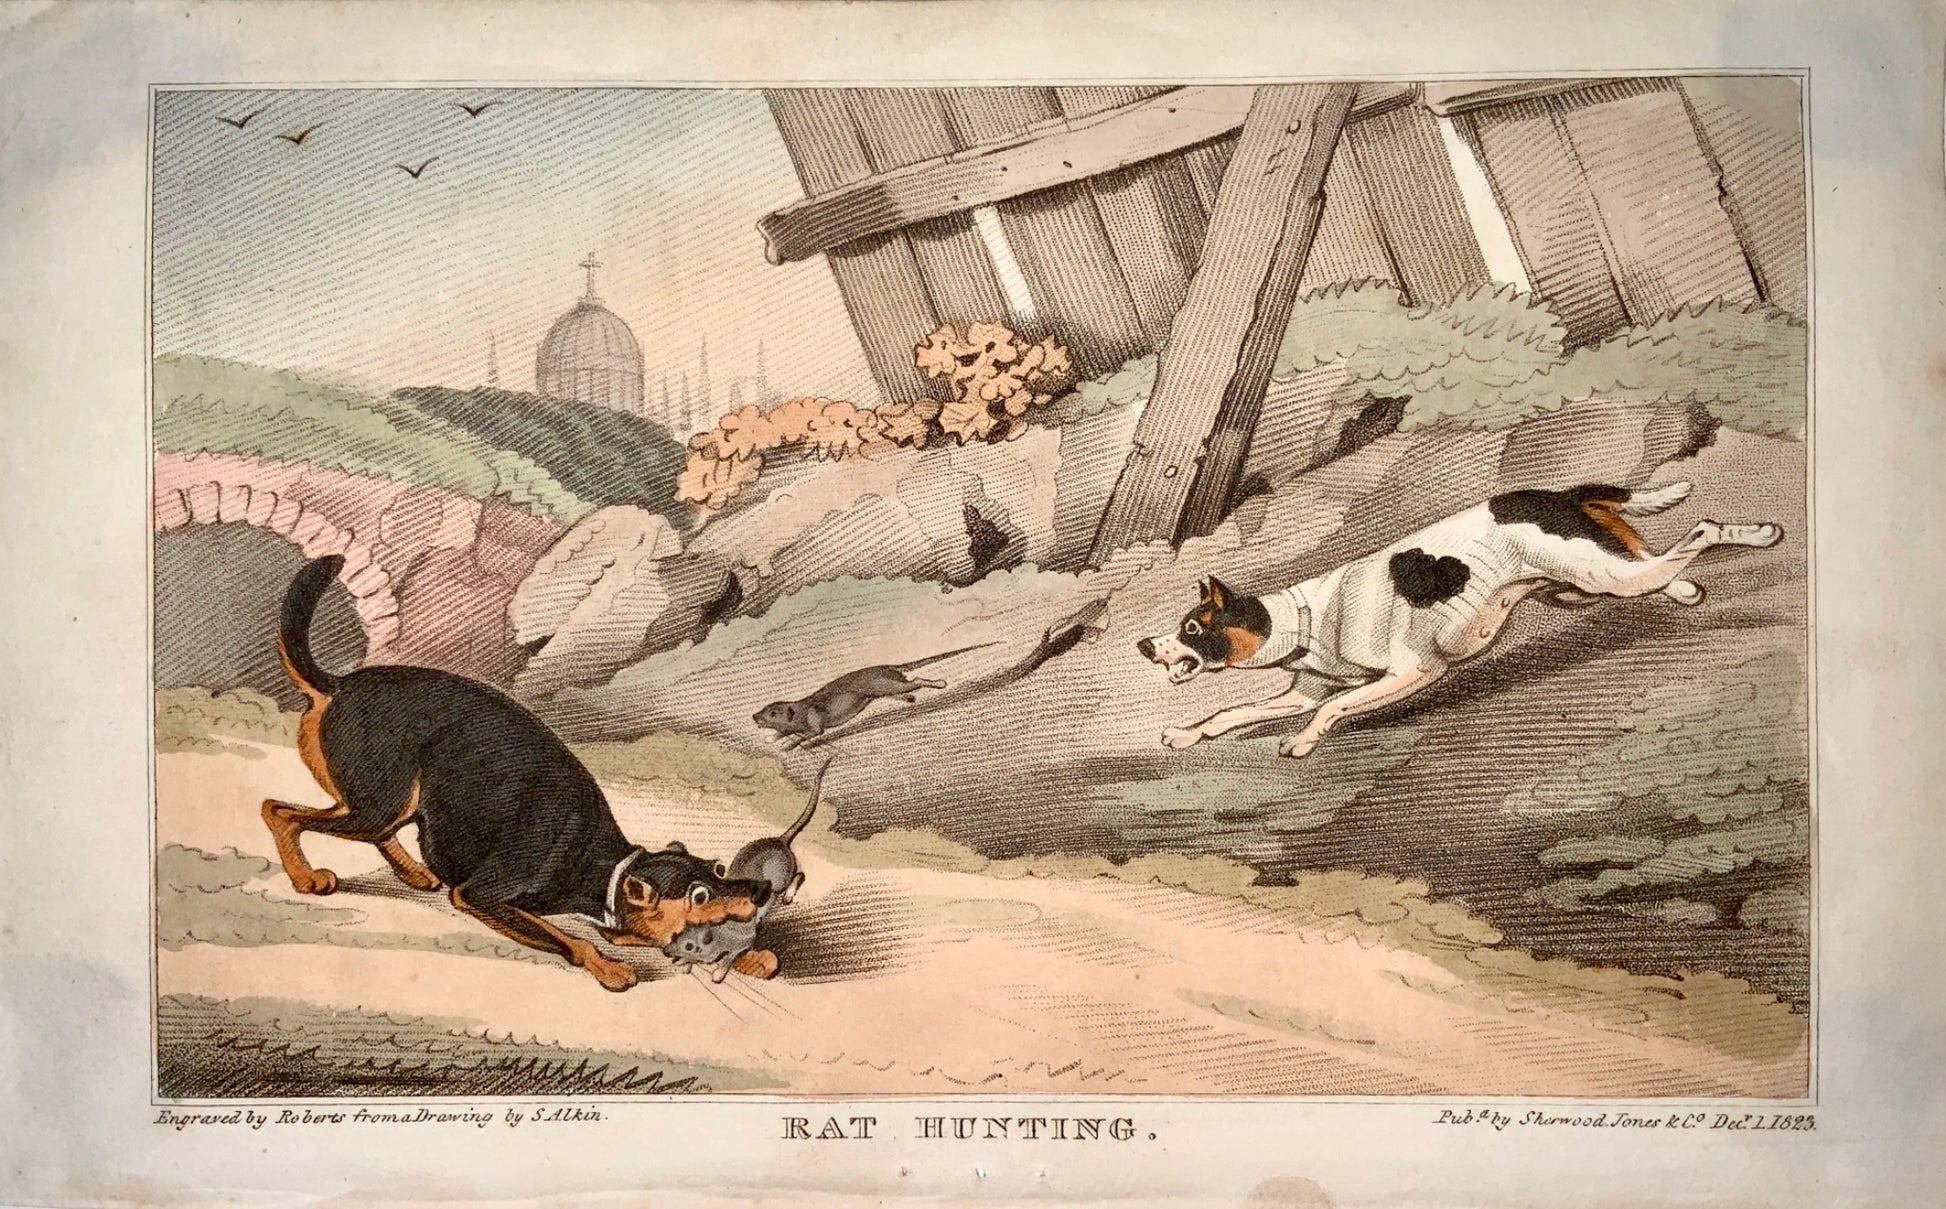 1823 Sherwood after Alken - RAT HUNTING - hand coloured aquatint